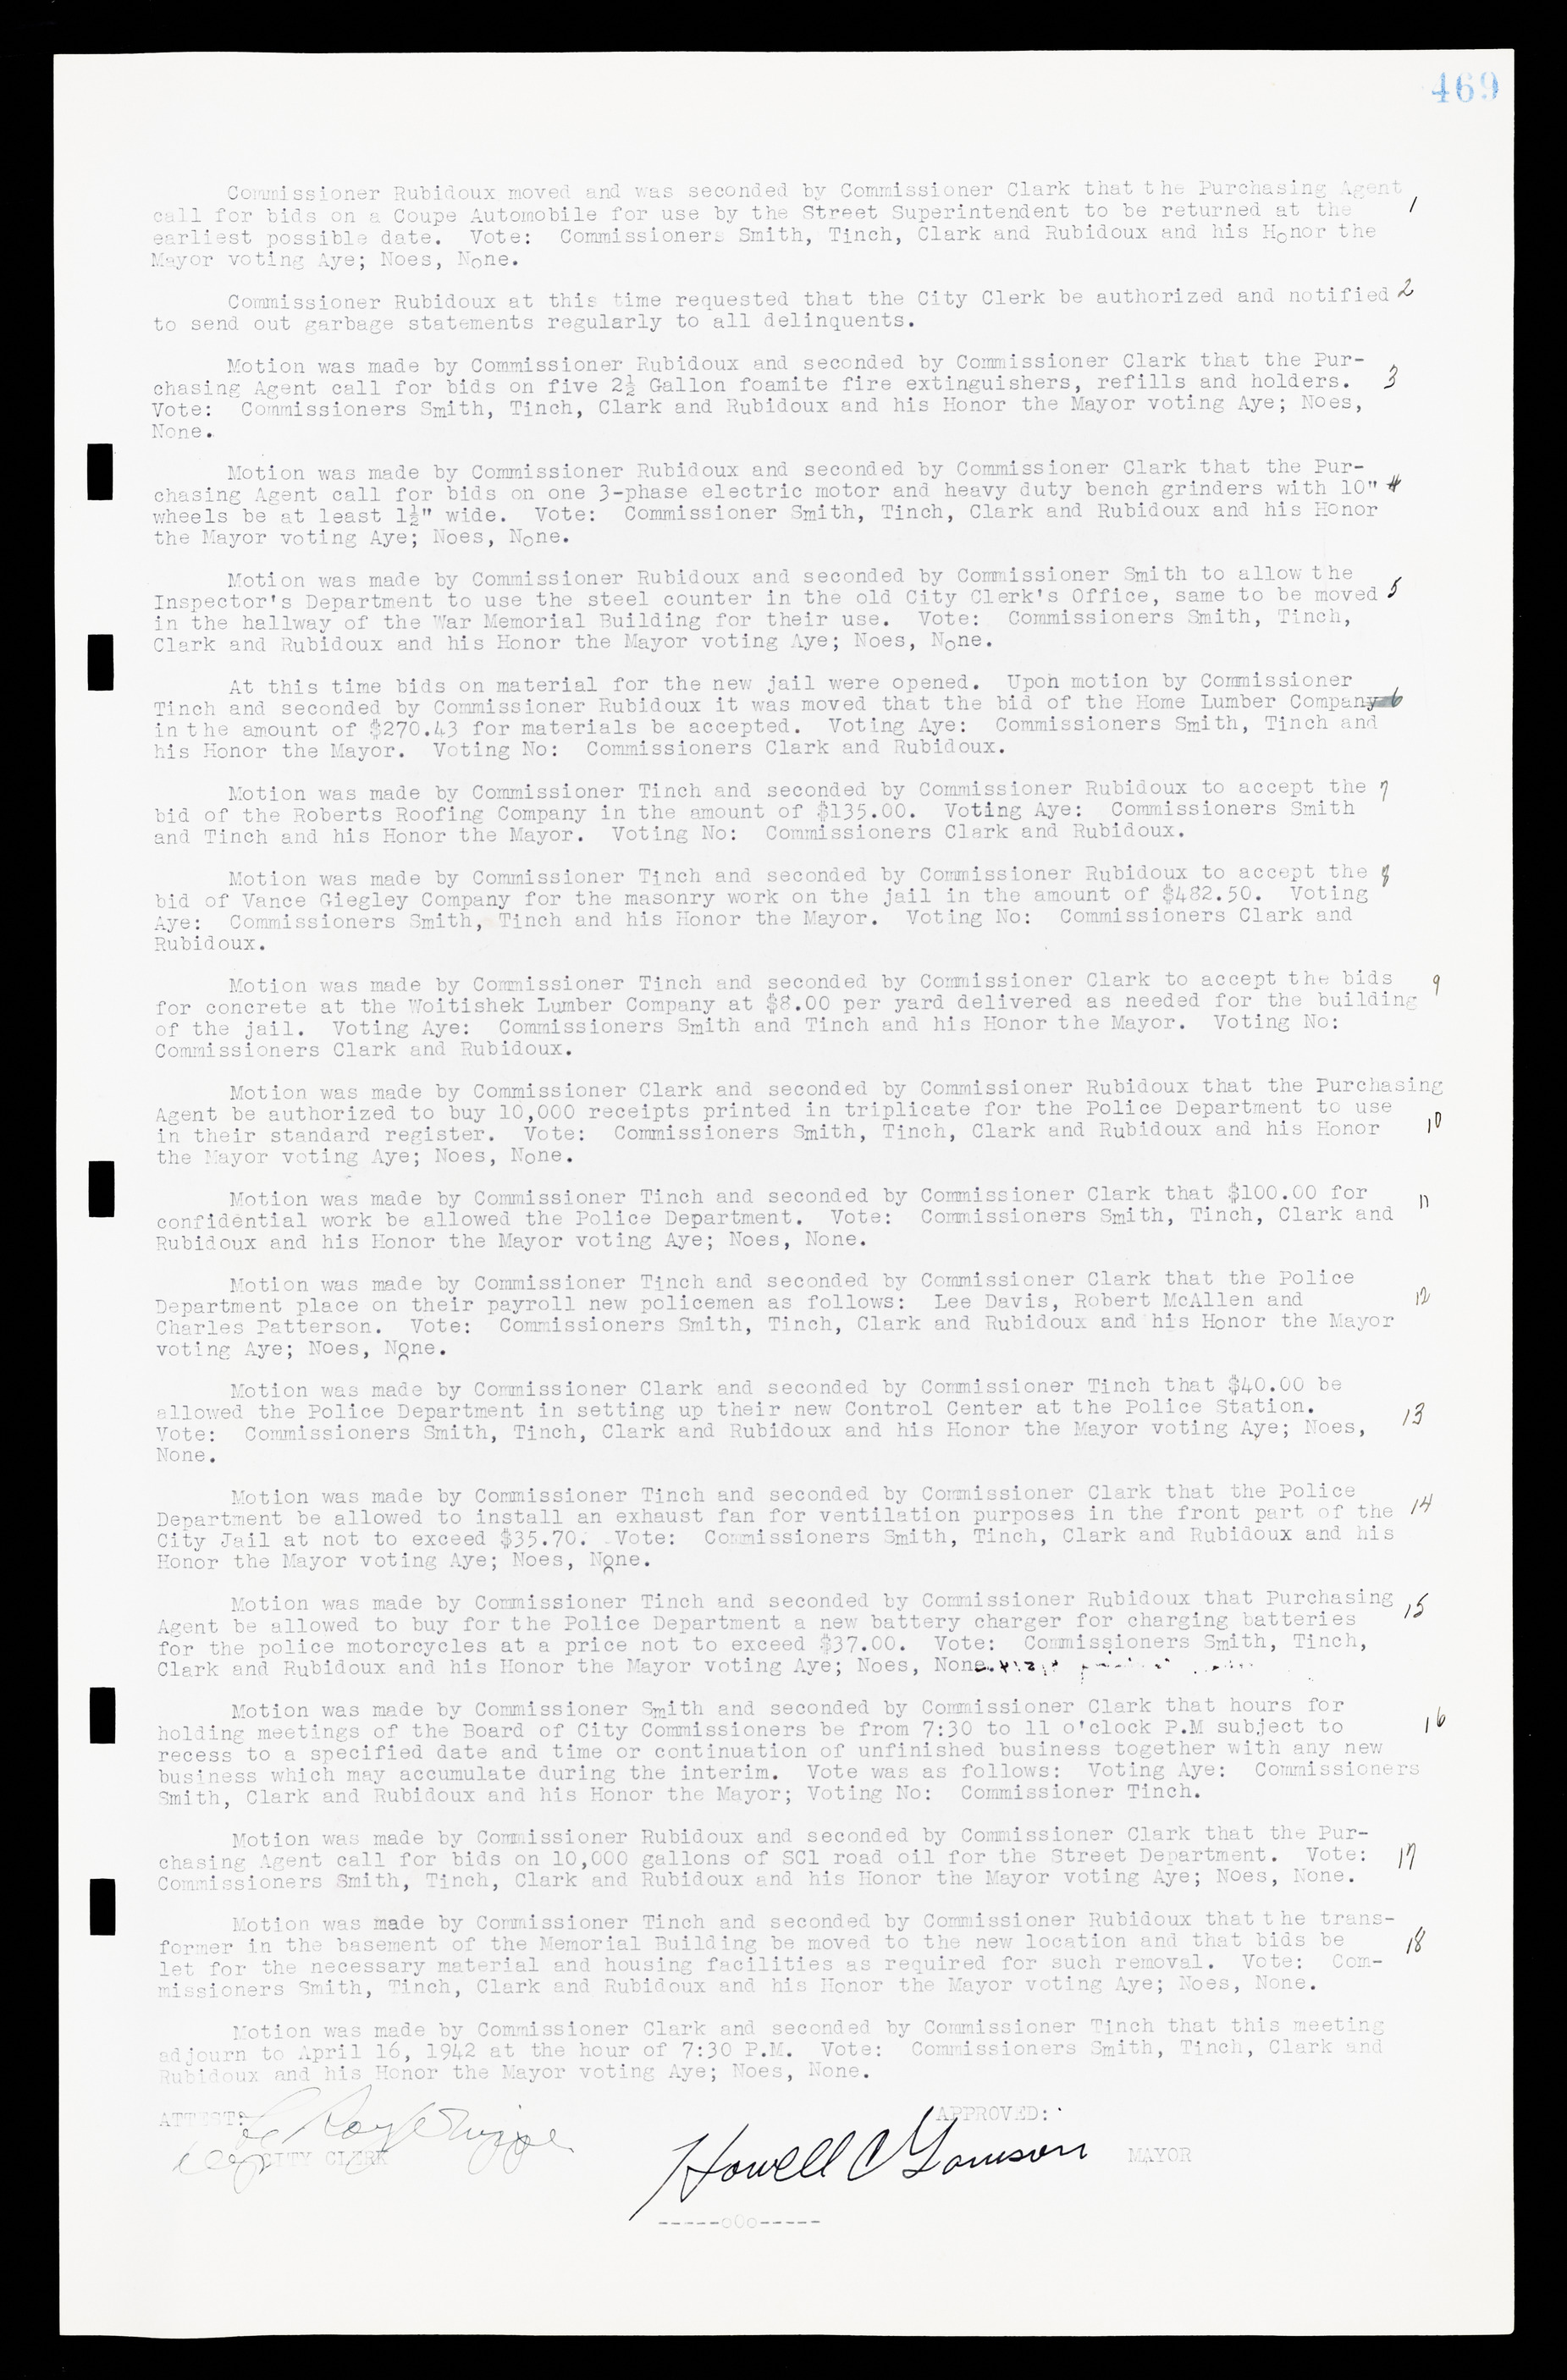 Las Vegas City Commission Minutes, February 17, 1937 to August 4, 1942, lvc000004-497